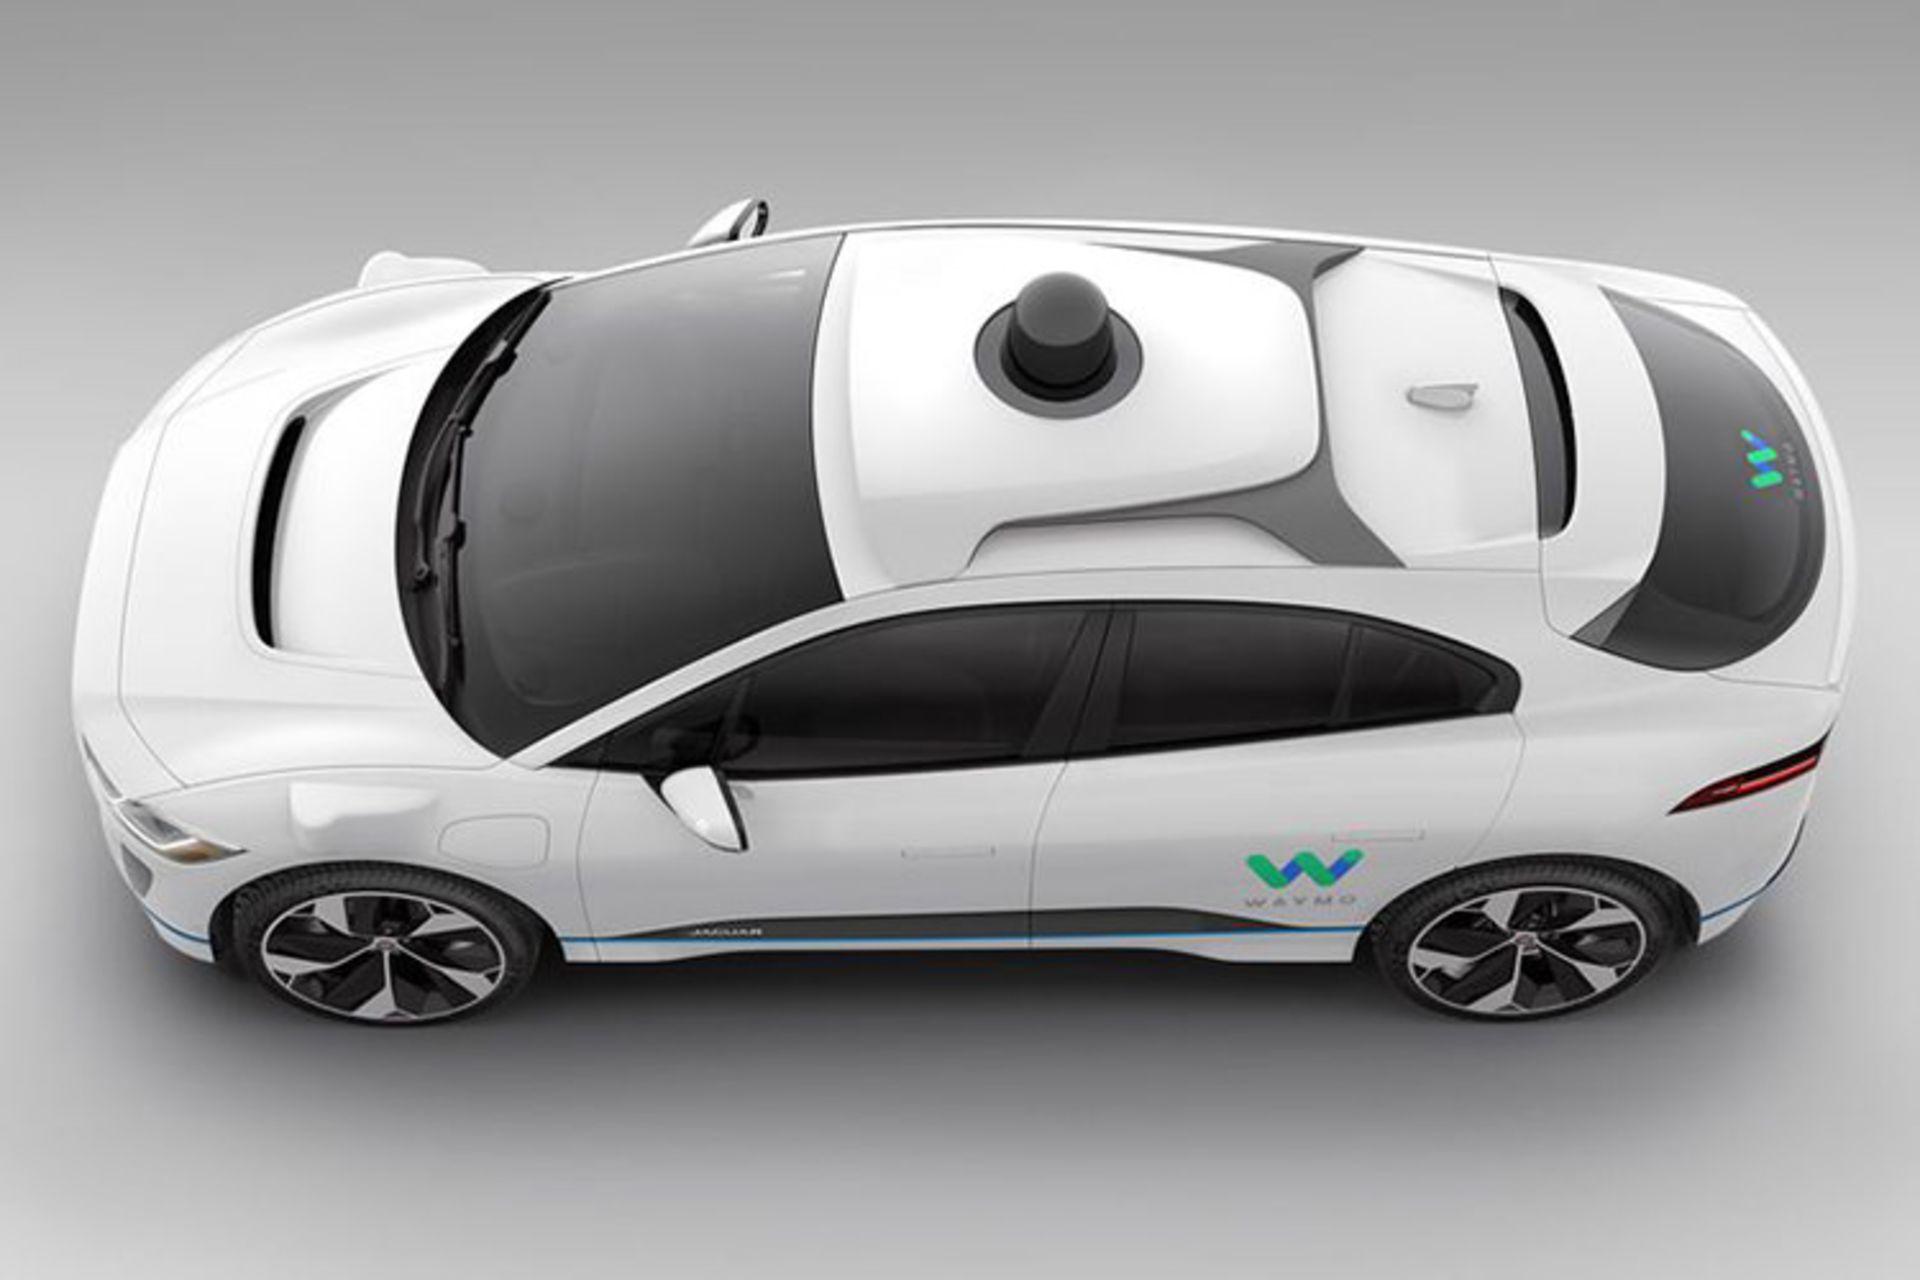 مرجع متخصصين ايران Waymo Autonomous Jaguar I-Pace / شاسي‌بلند خودران جگوار I-Pace ويمو